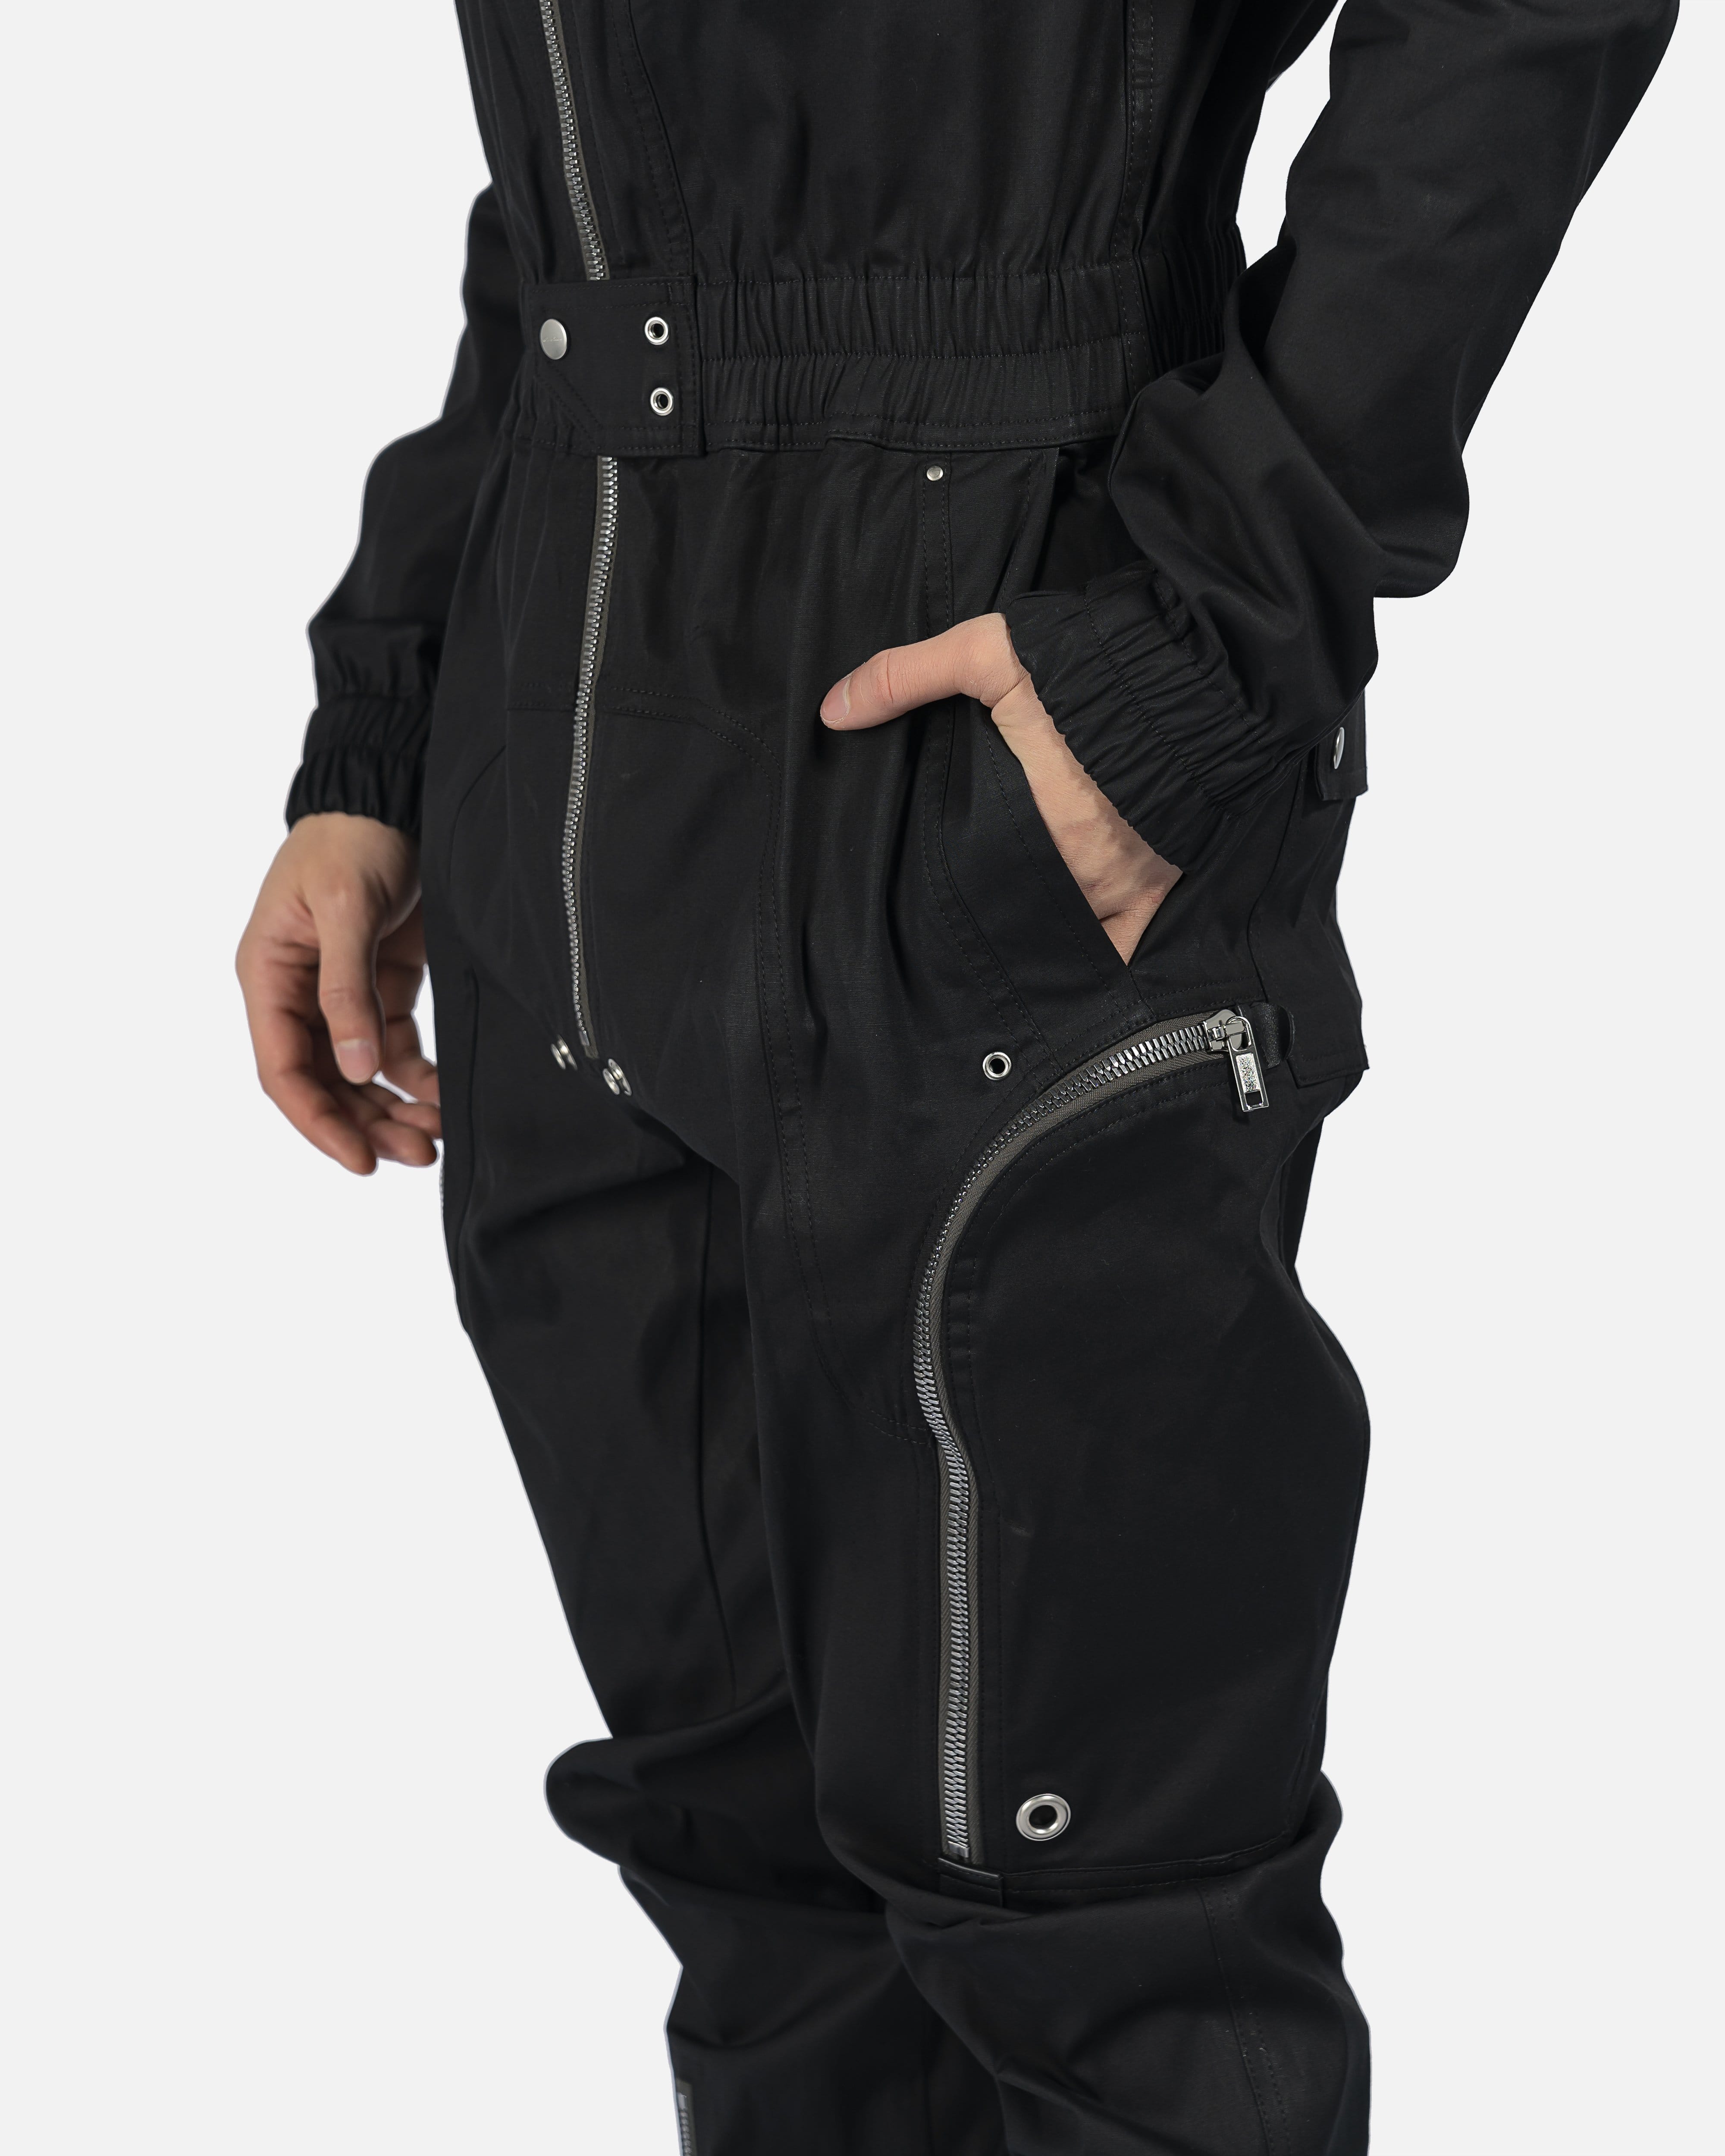 Bauhaus Larry Flightsuit in Black – SVRN